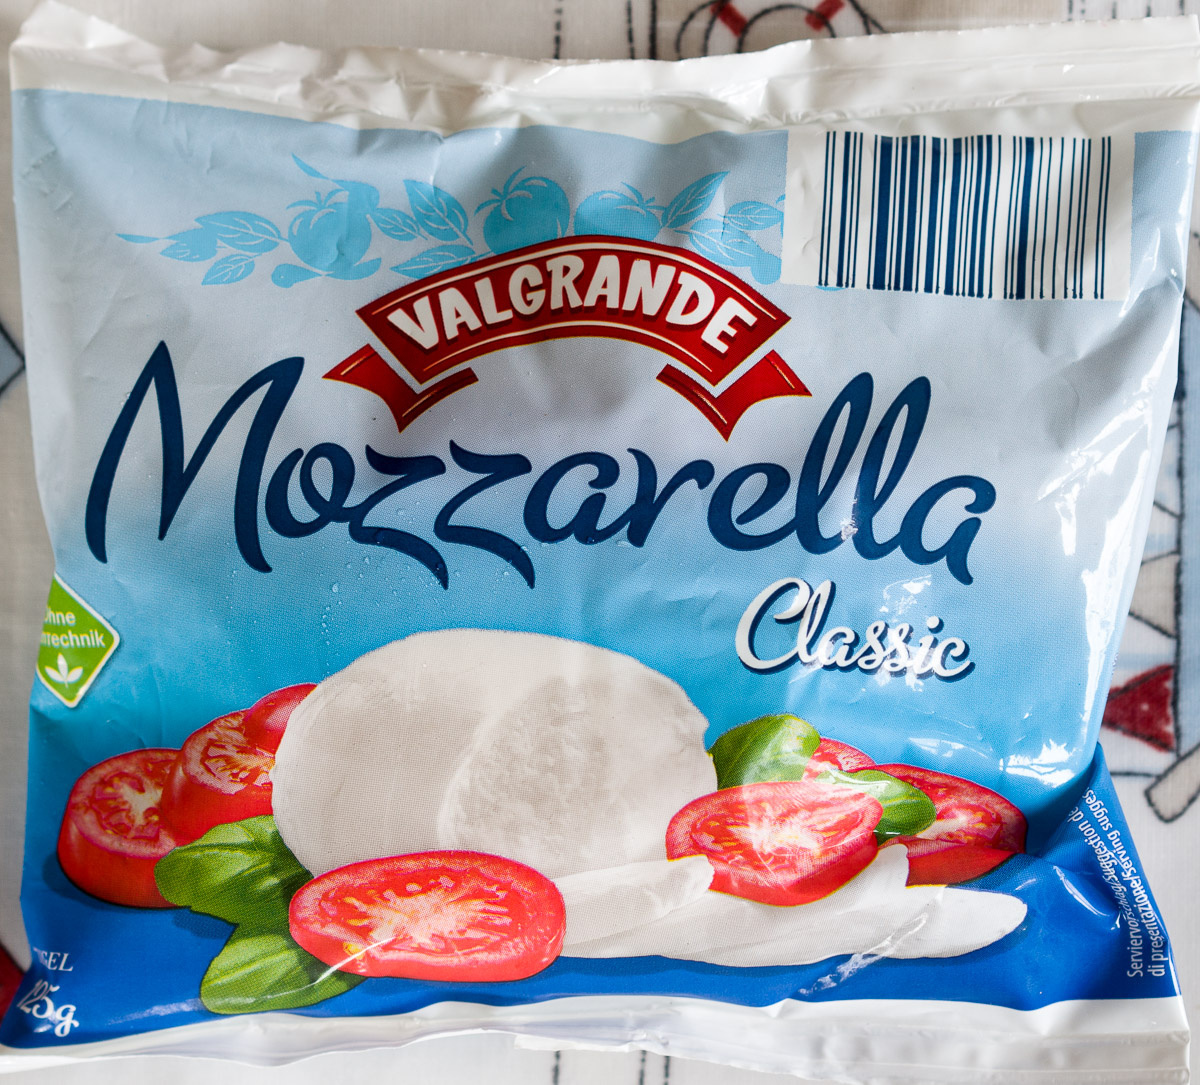 Mozzarella Valgrande